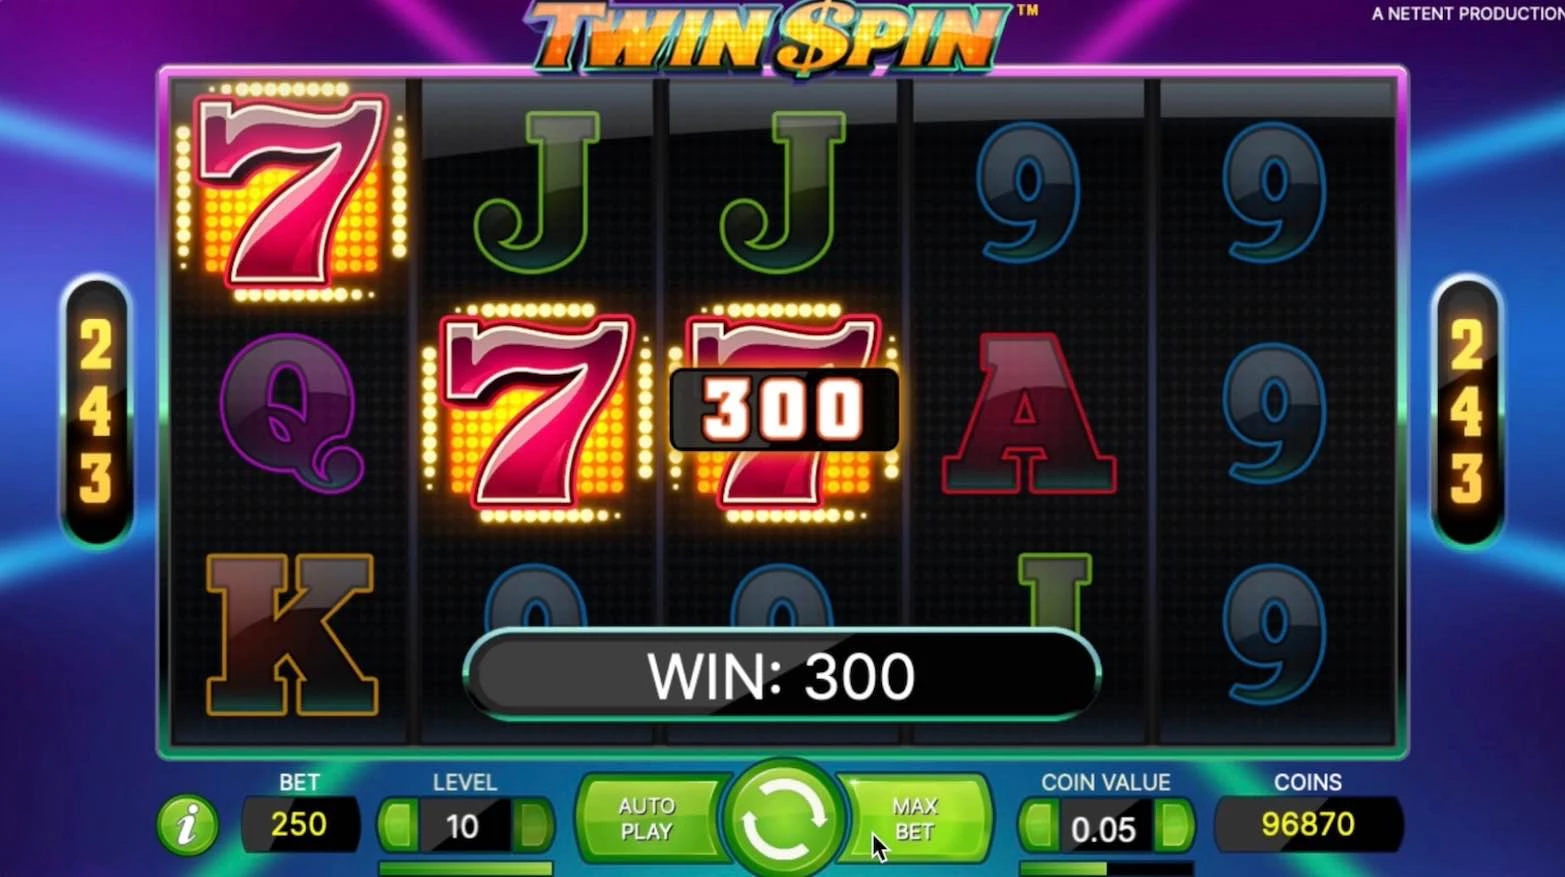 Twin Spin (NetEnt) Seven symbol won $300